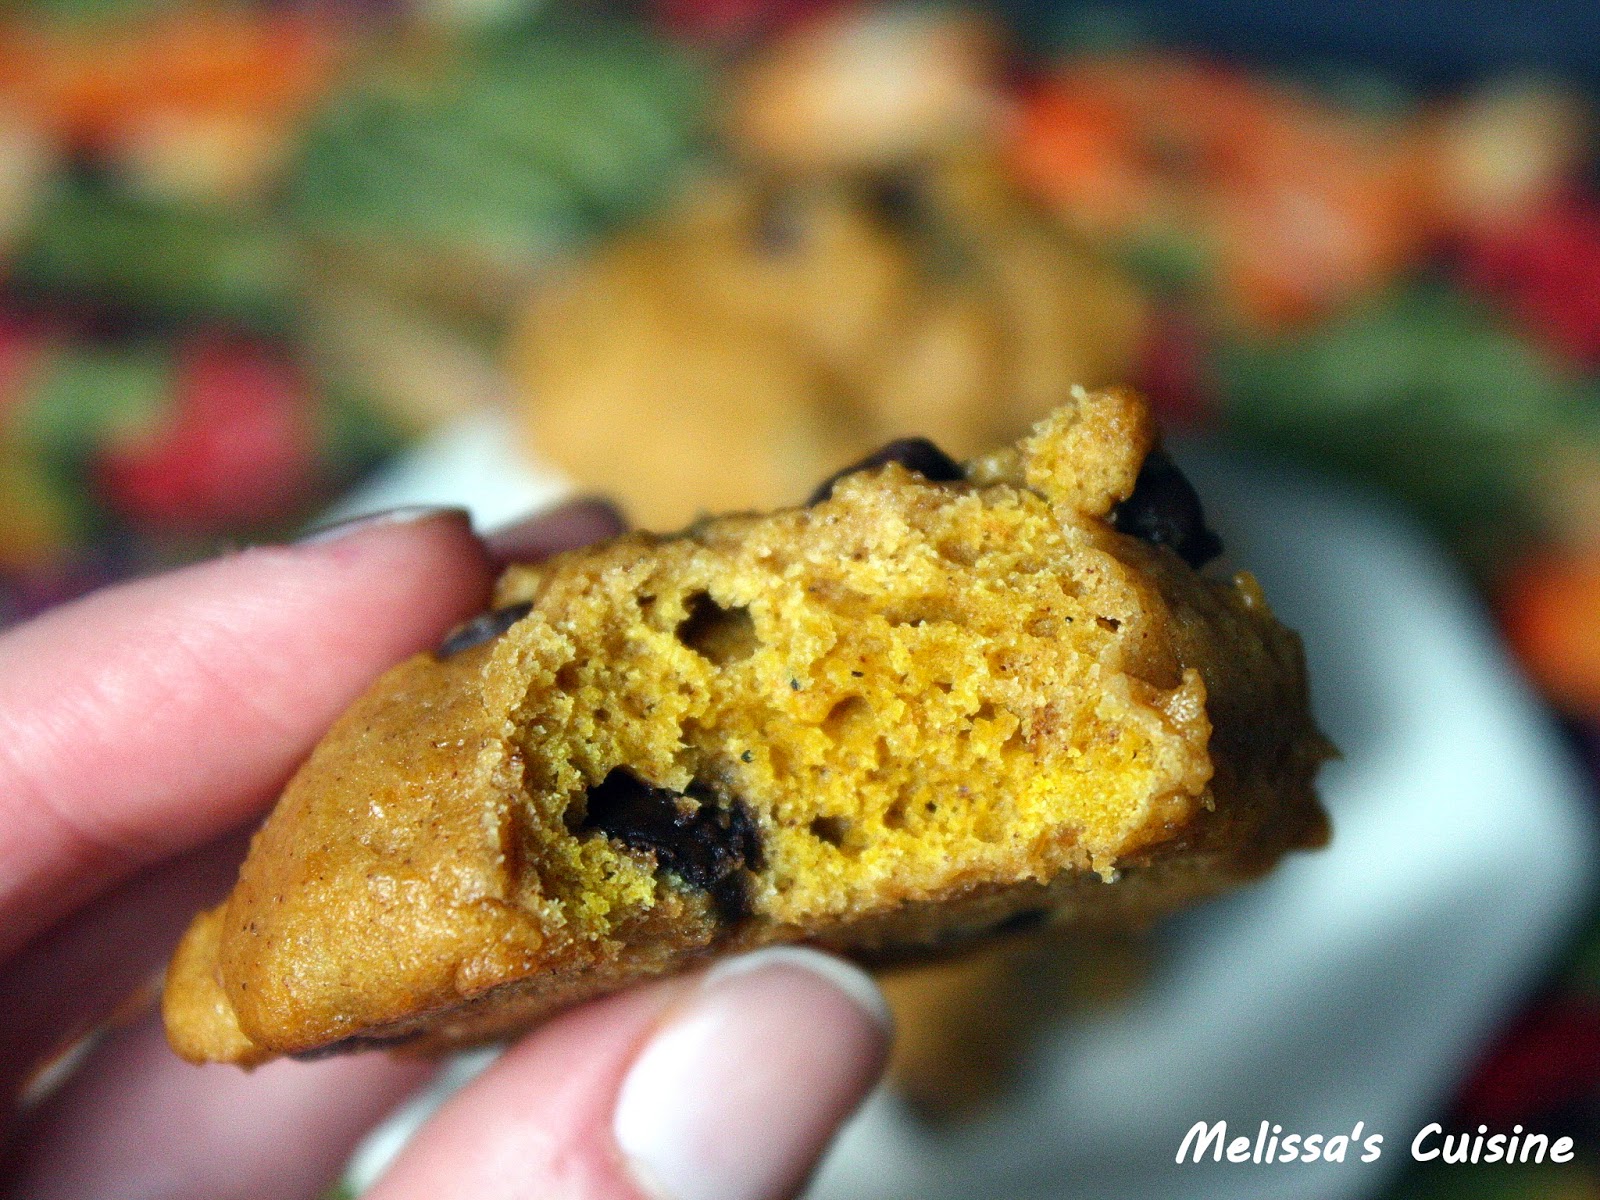 Melissa's Cuisine: Pumpkin Chocolate Chip Cookies